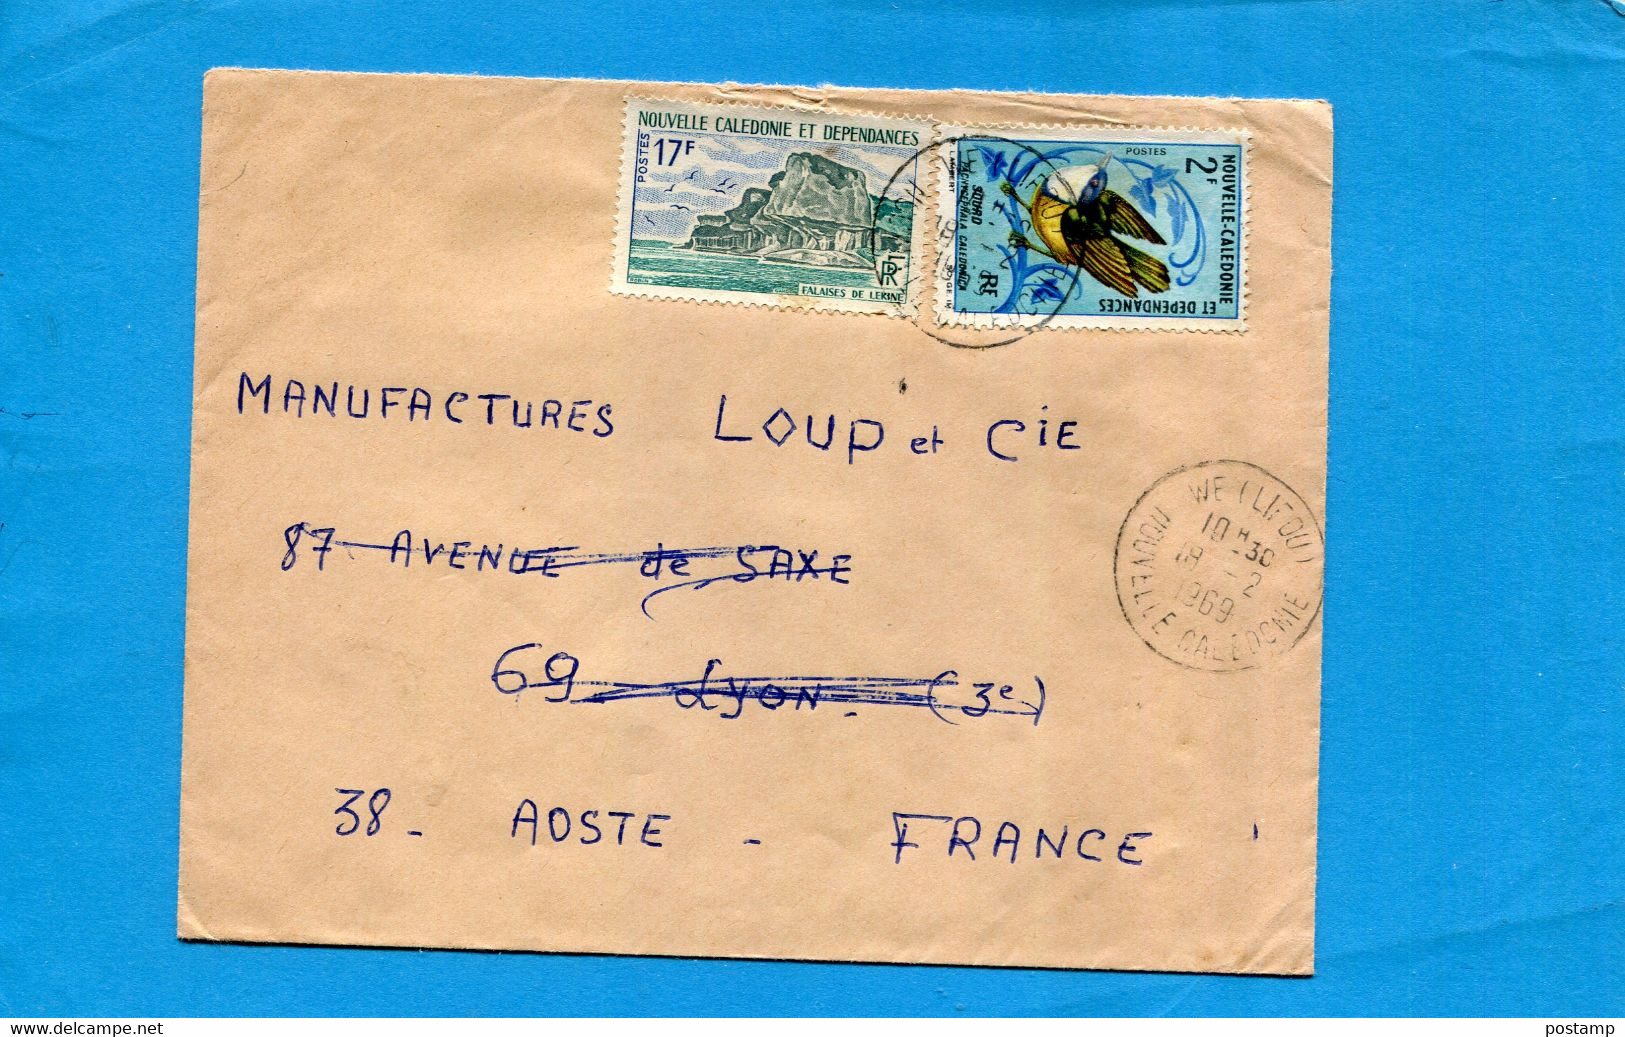 MARCOPHILIE-Nlle Calédonie-lettre+thematics Stamps-cad We Lifou1969- 2stamps N°346 Oiseau+335 - Briefe U. Dokumente